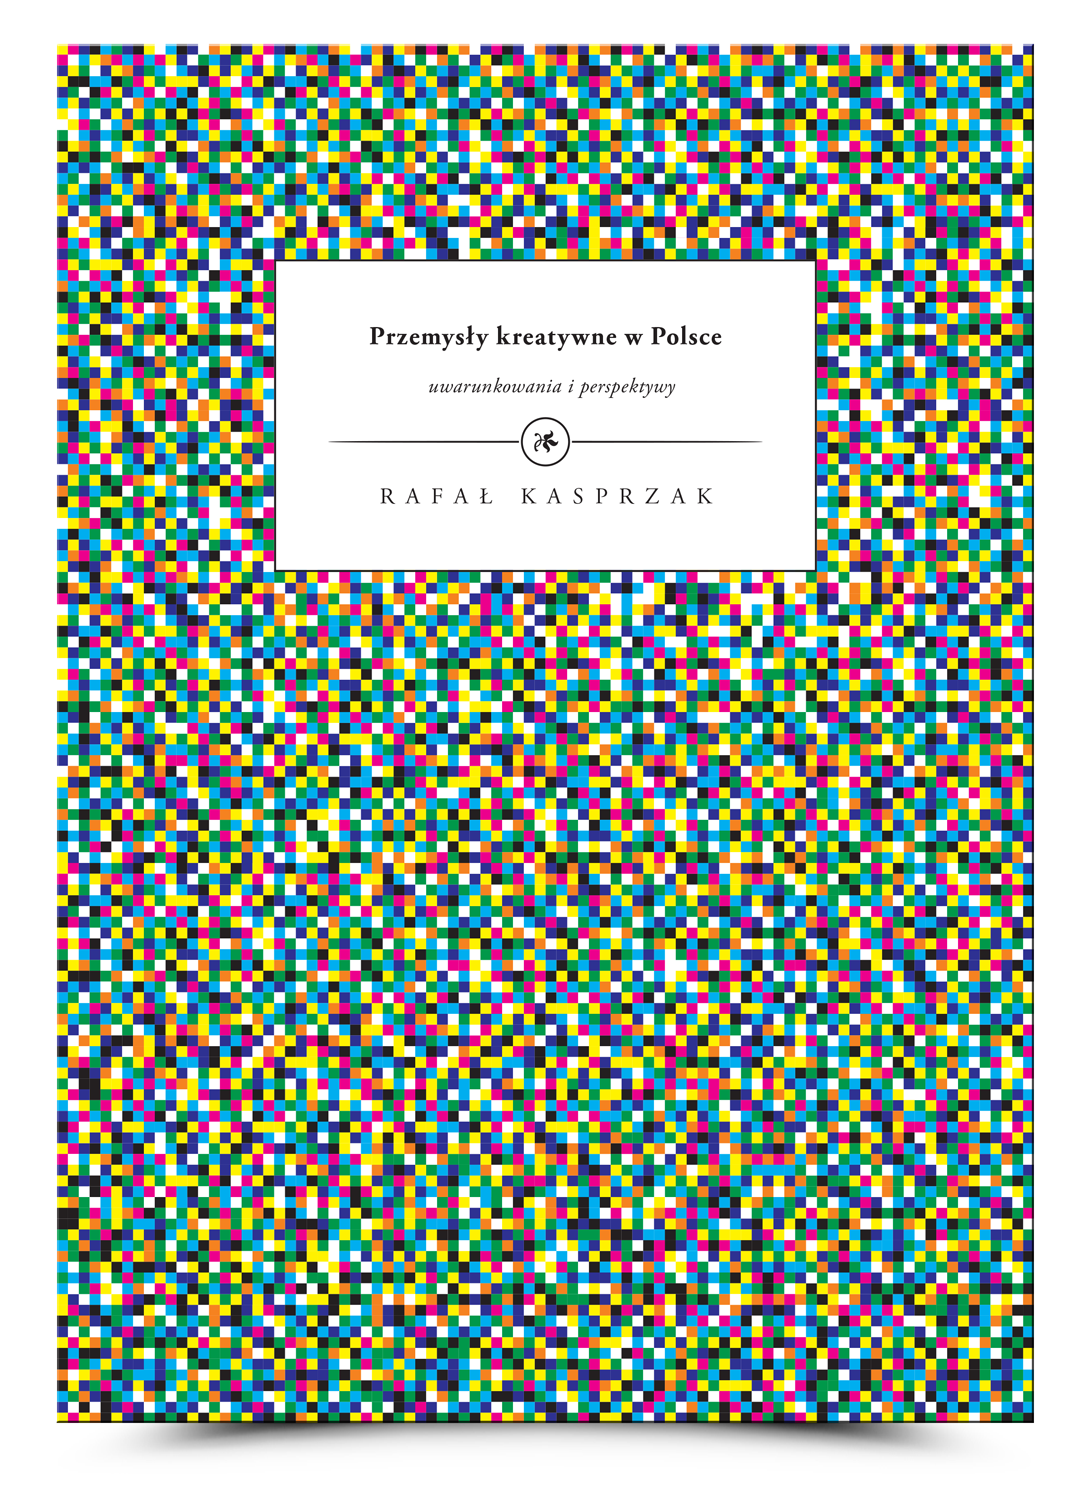 book cover borutta pixel Pixel Perfection colorfull Garamond Classic type MACHALSKI Grphic Design contenporary jan tschichold